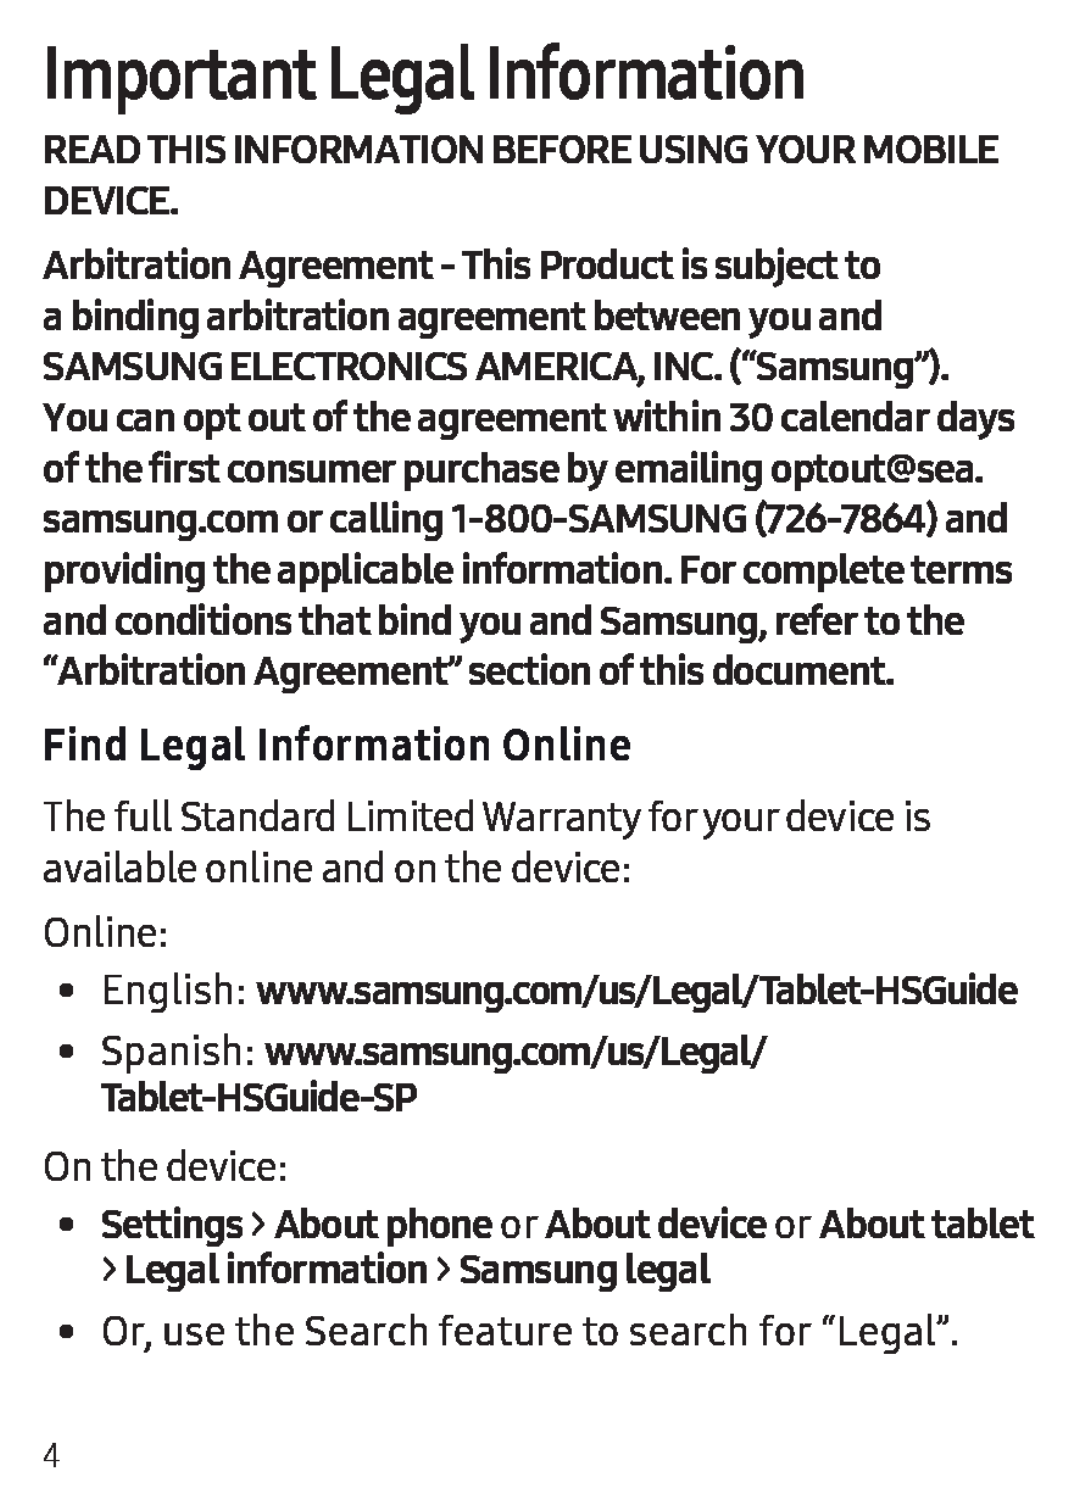 Find Legal Information Online Galaxy Tab E 8.0 US Cellular